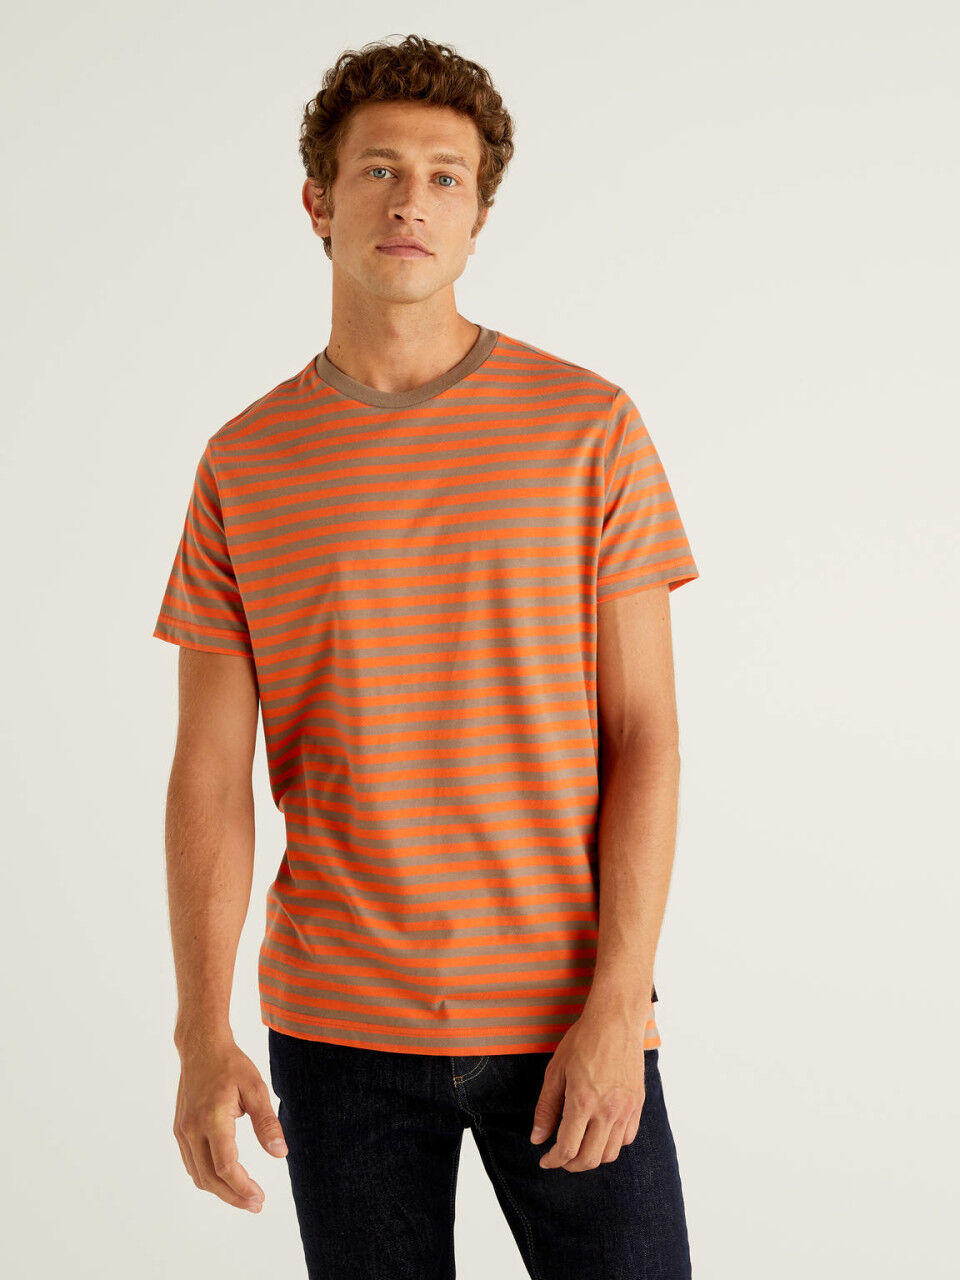 ucb orange t shirt